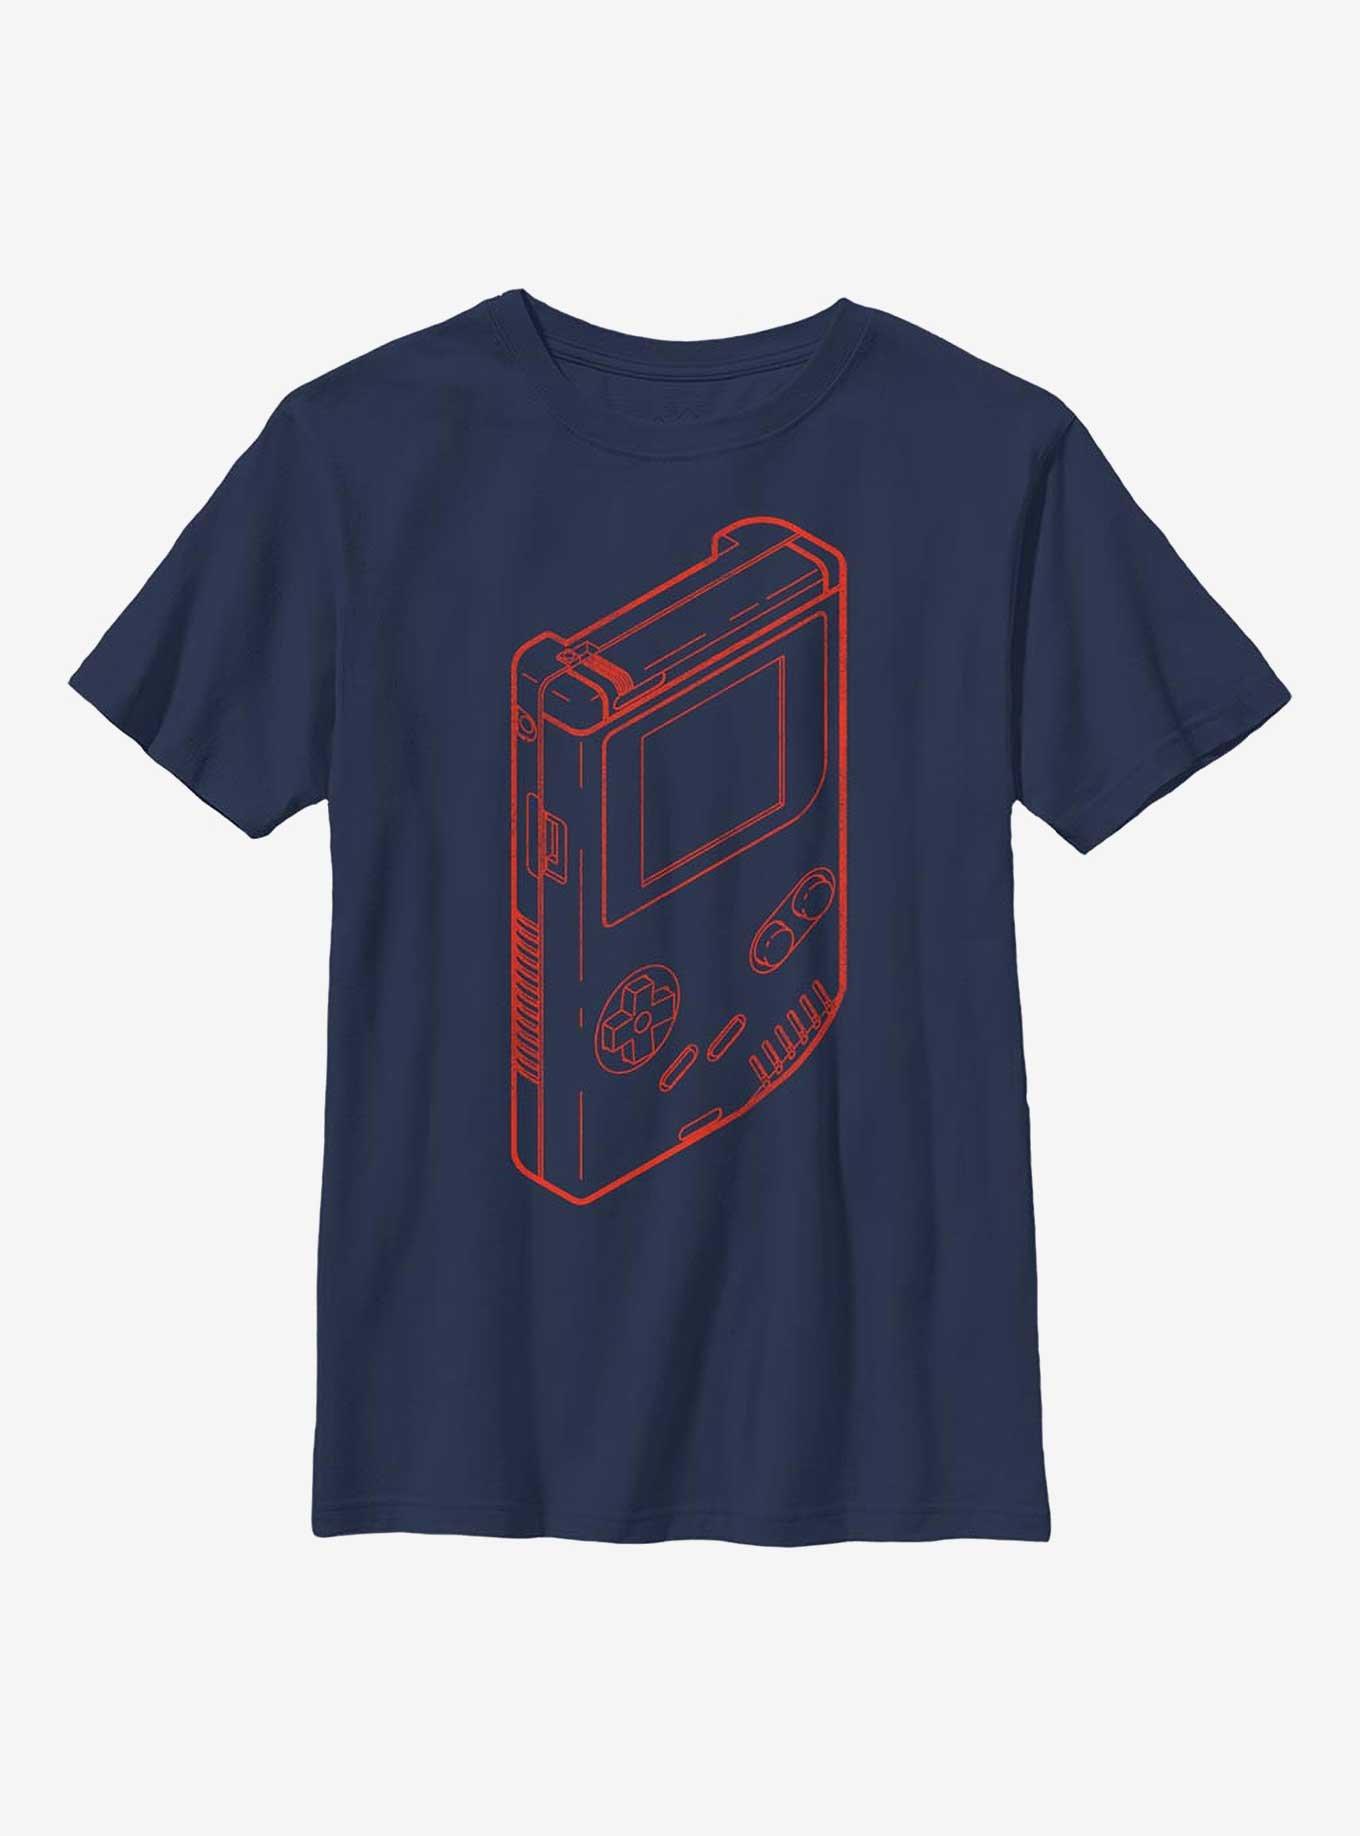 Nintendo Game Boy Outline Youth T-Shirt, NAVY, hi-res